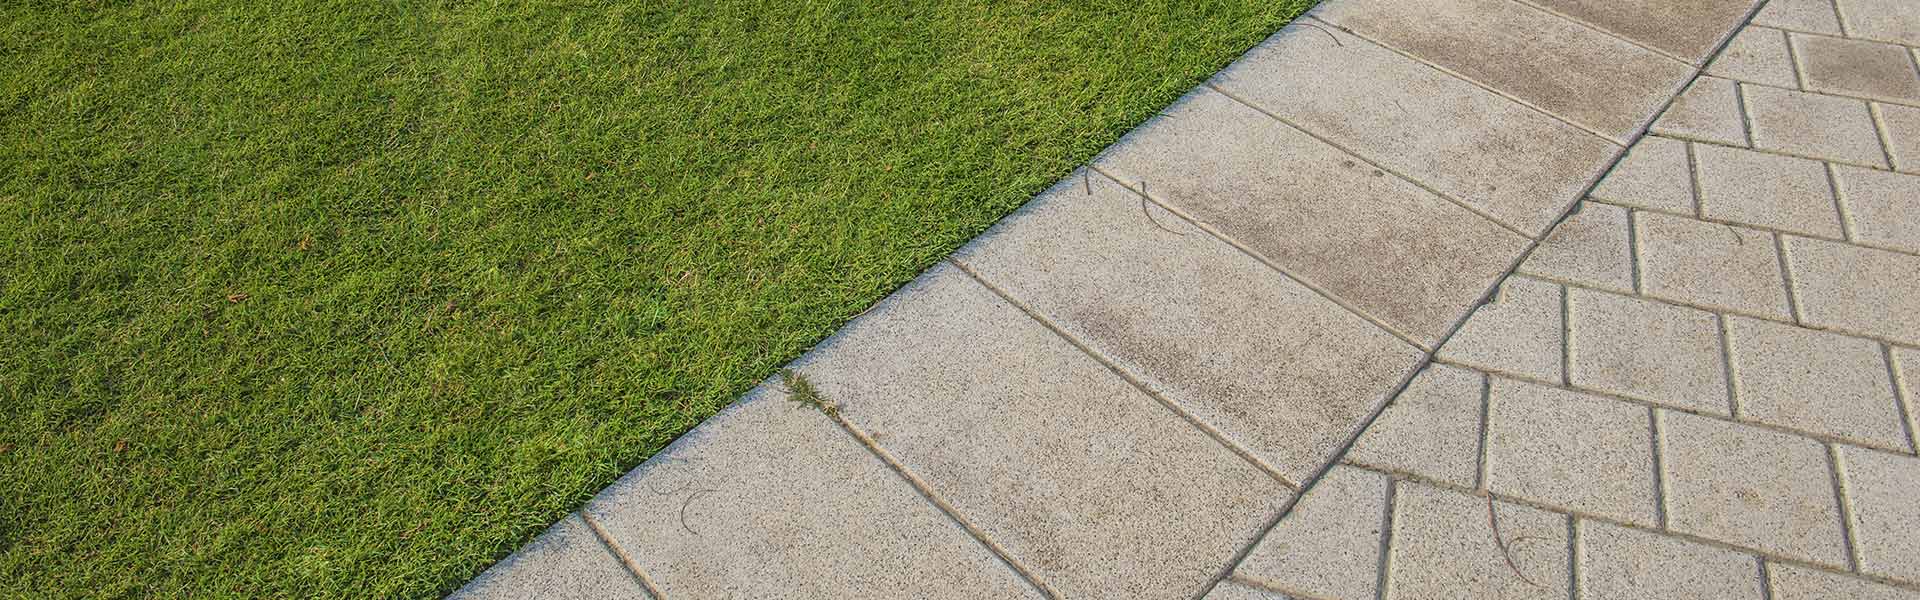 Manicured Lawn with Edging - Kwik Kerb Toowoomba